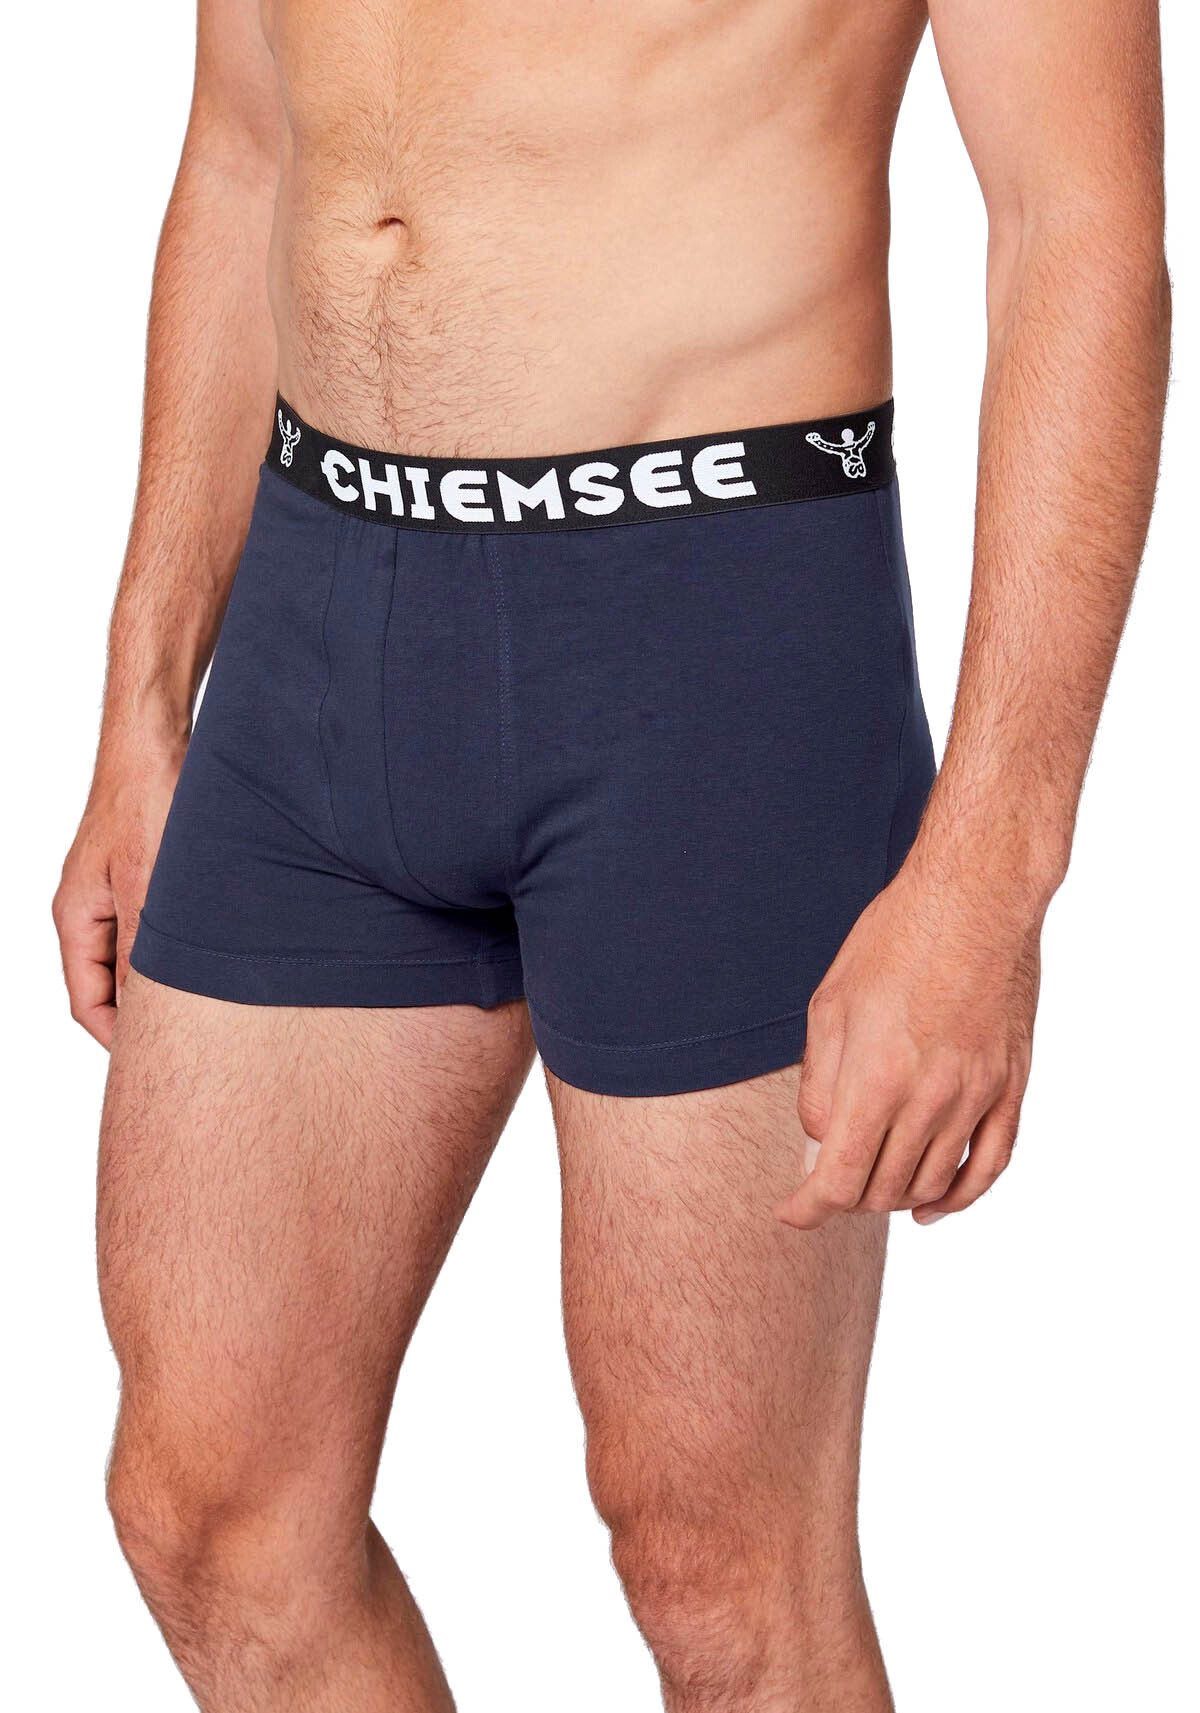 6er Boxer Herren Boxershorts, Dunkelblau Logobund Pack Chiemsee - Shorts,